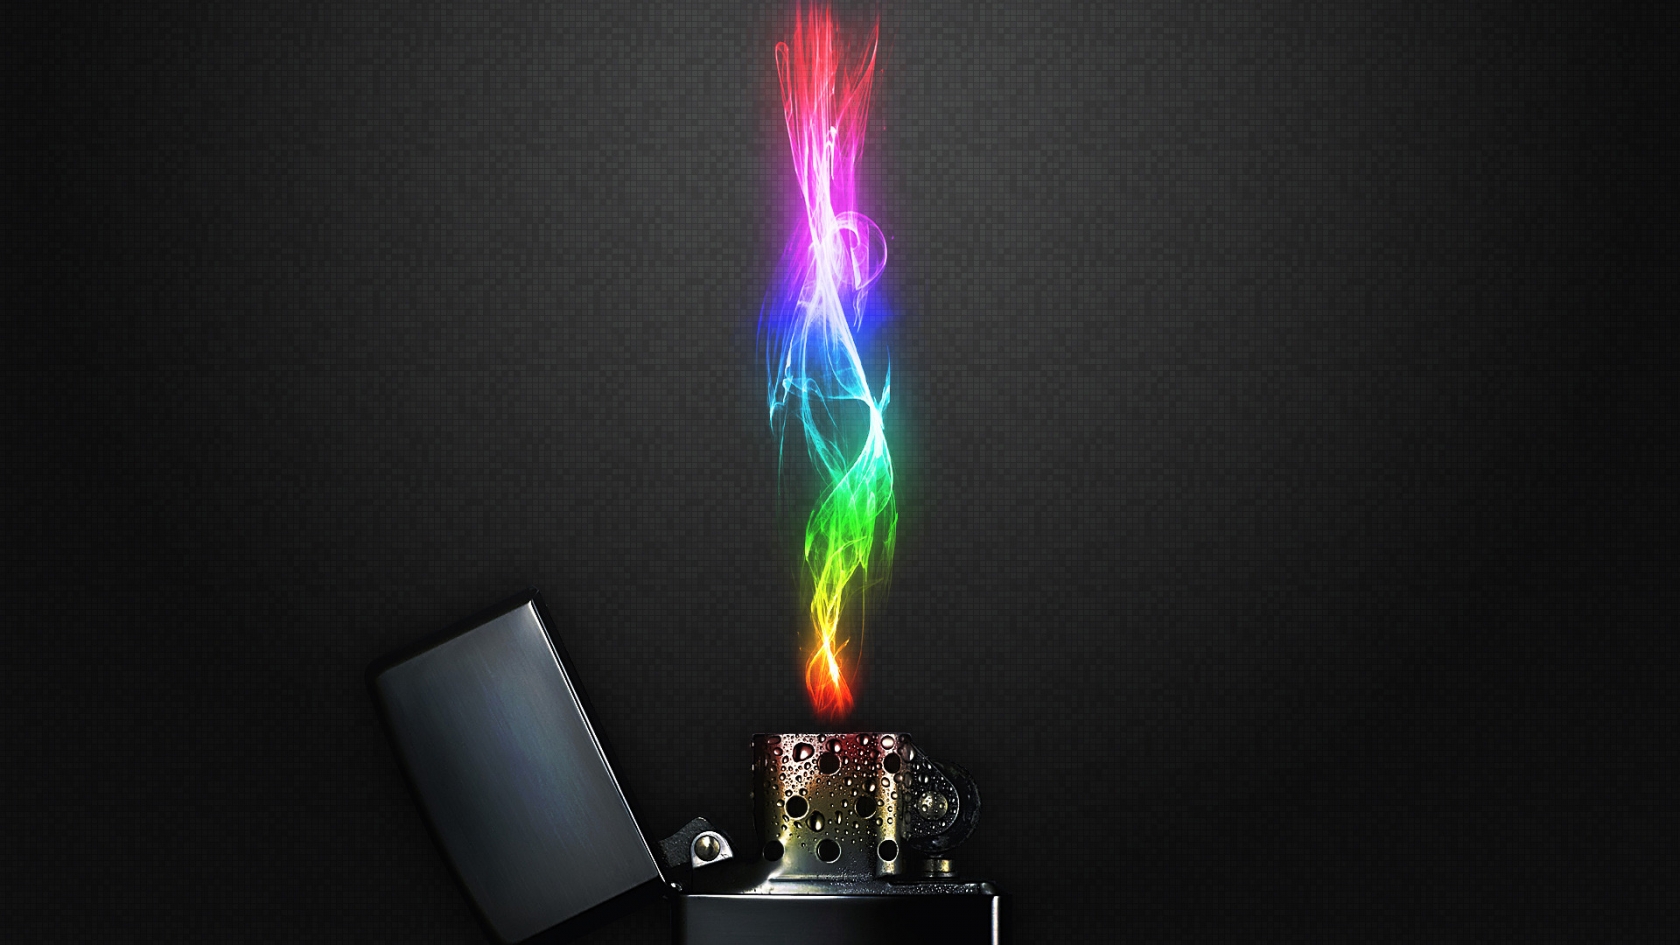 Rainbow Lighter for 1680 x 945 HDTV resolution